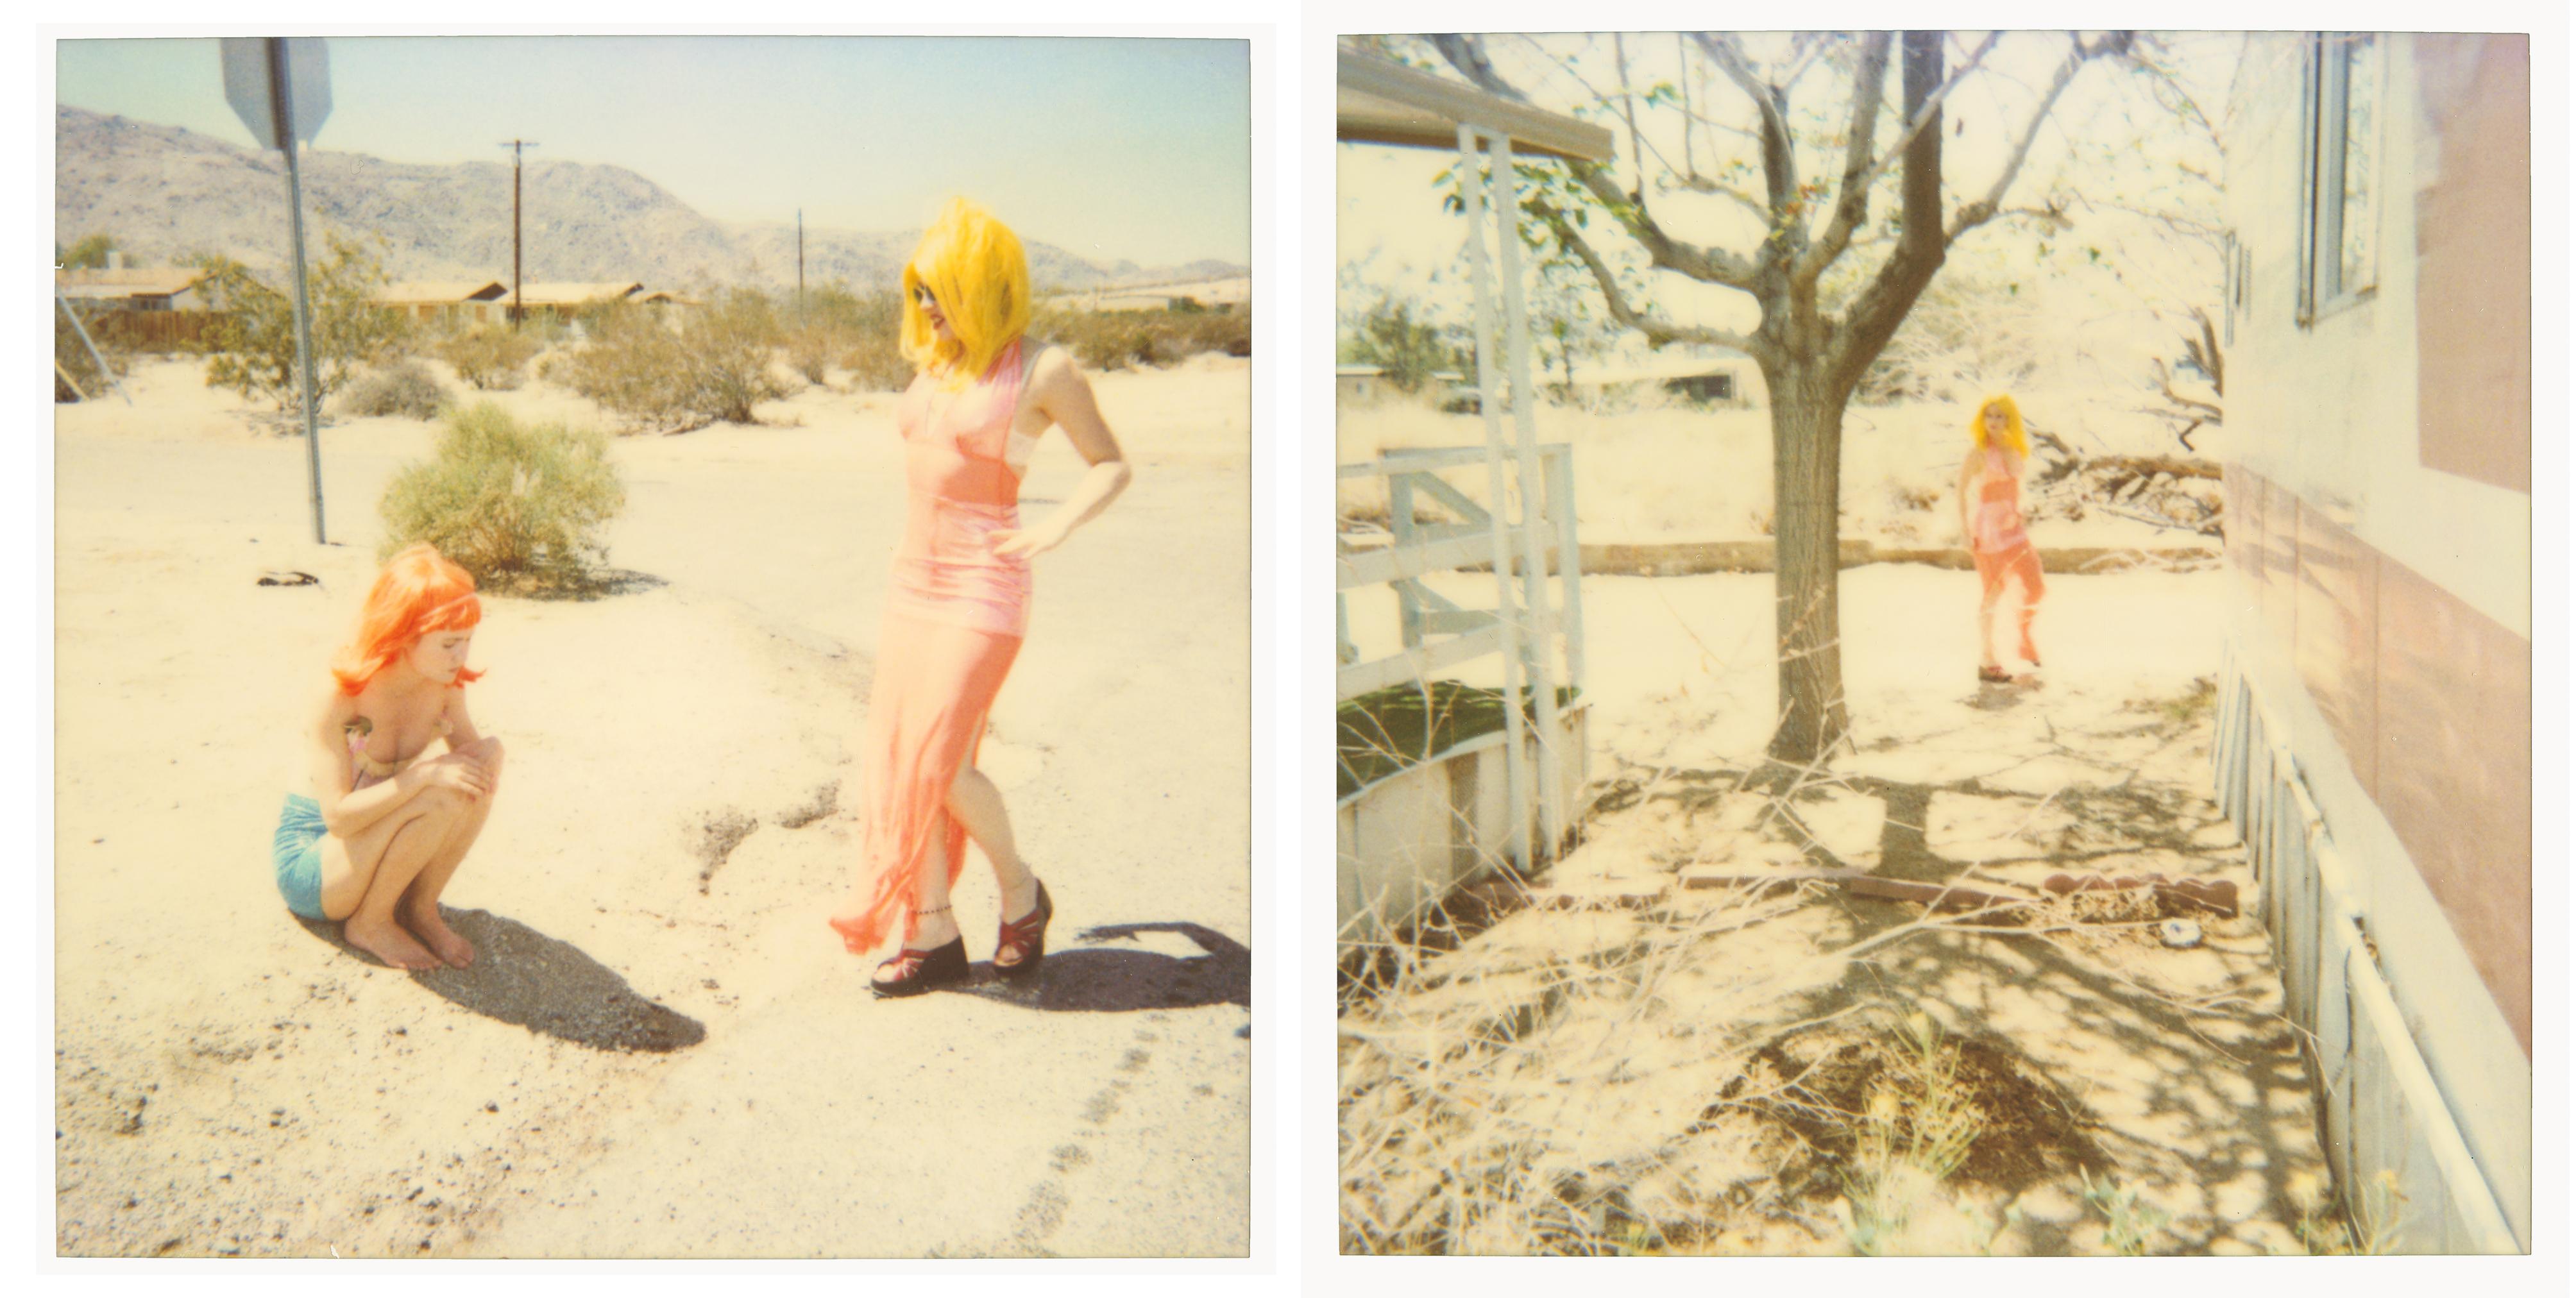 Stefanie Schneider Portrait Photograph - Radha and Max on Dirt Road (29 Palms, CA) - 20x20cm each, Polaroid, Contemporary